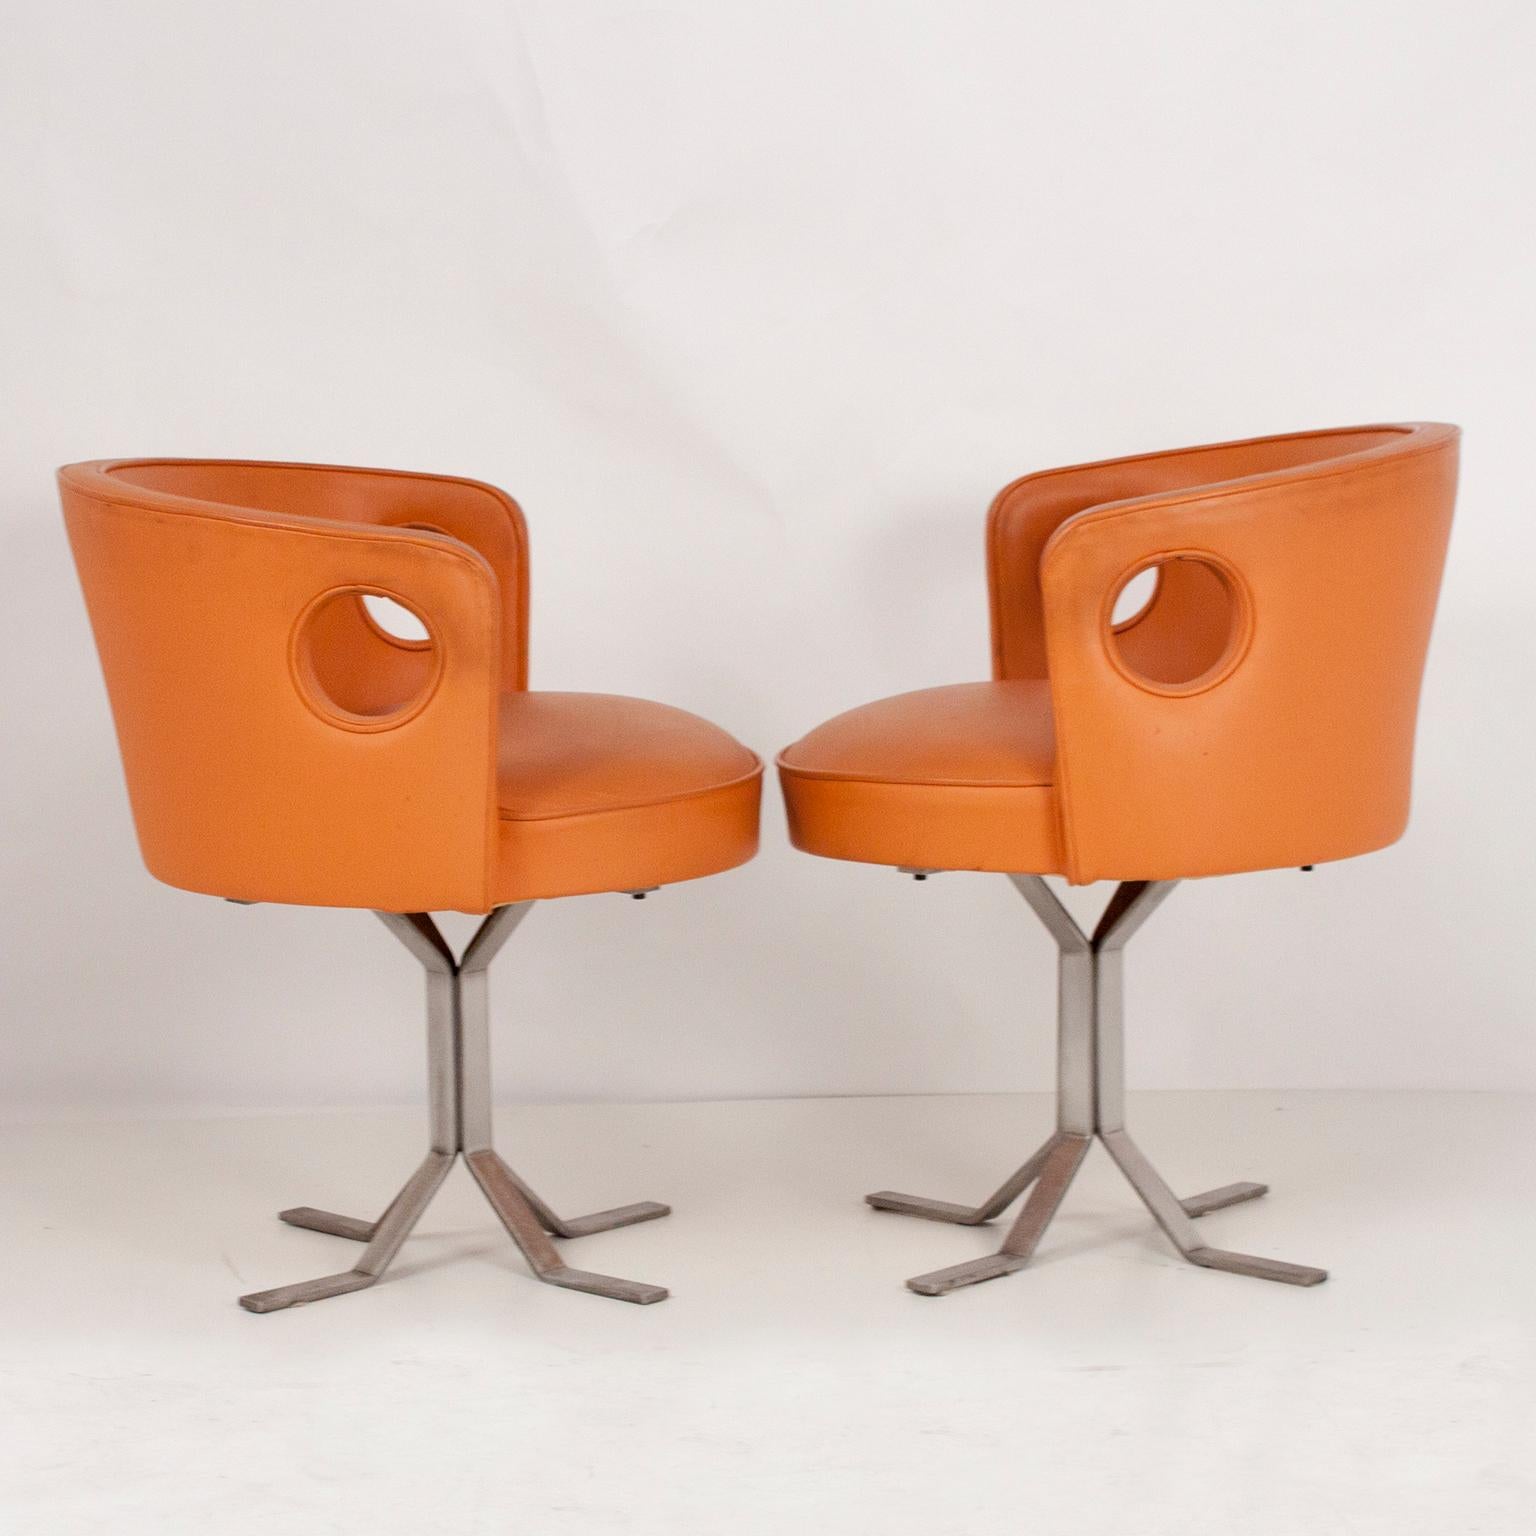 Spanish Jordi Vilanova pair of Midcentury Orange Leather Chairs, 1970s